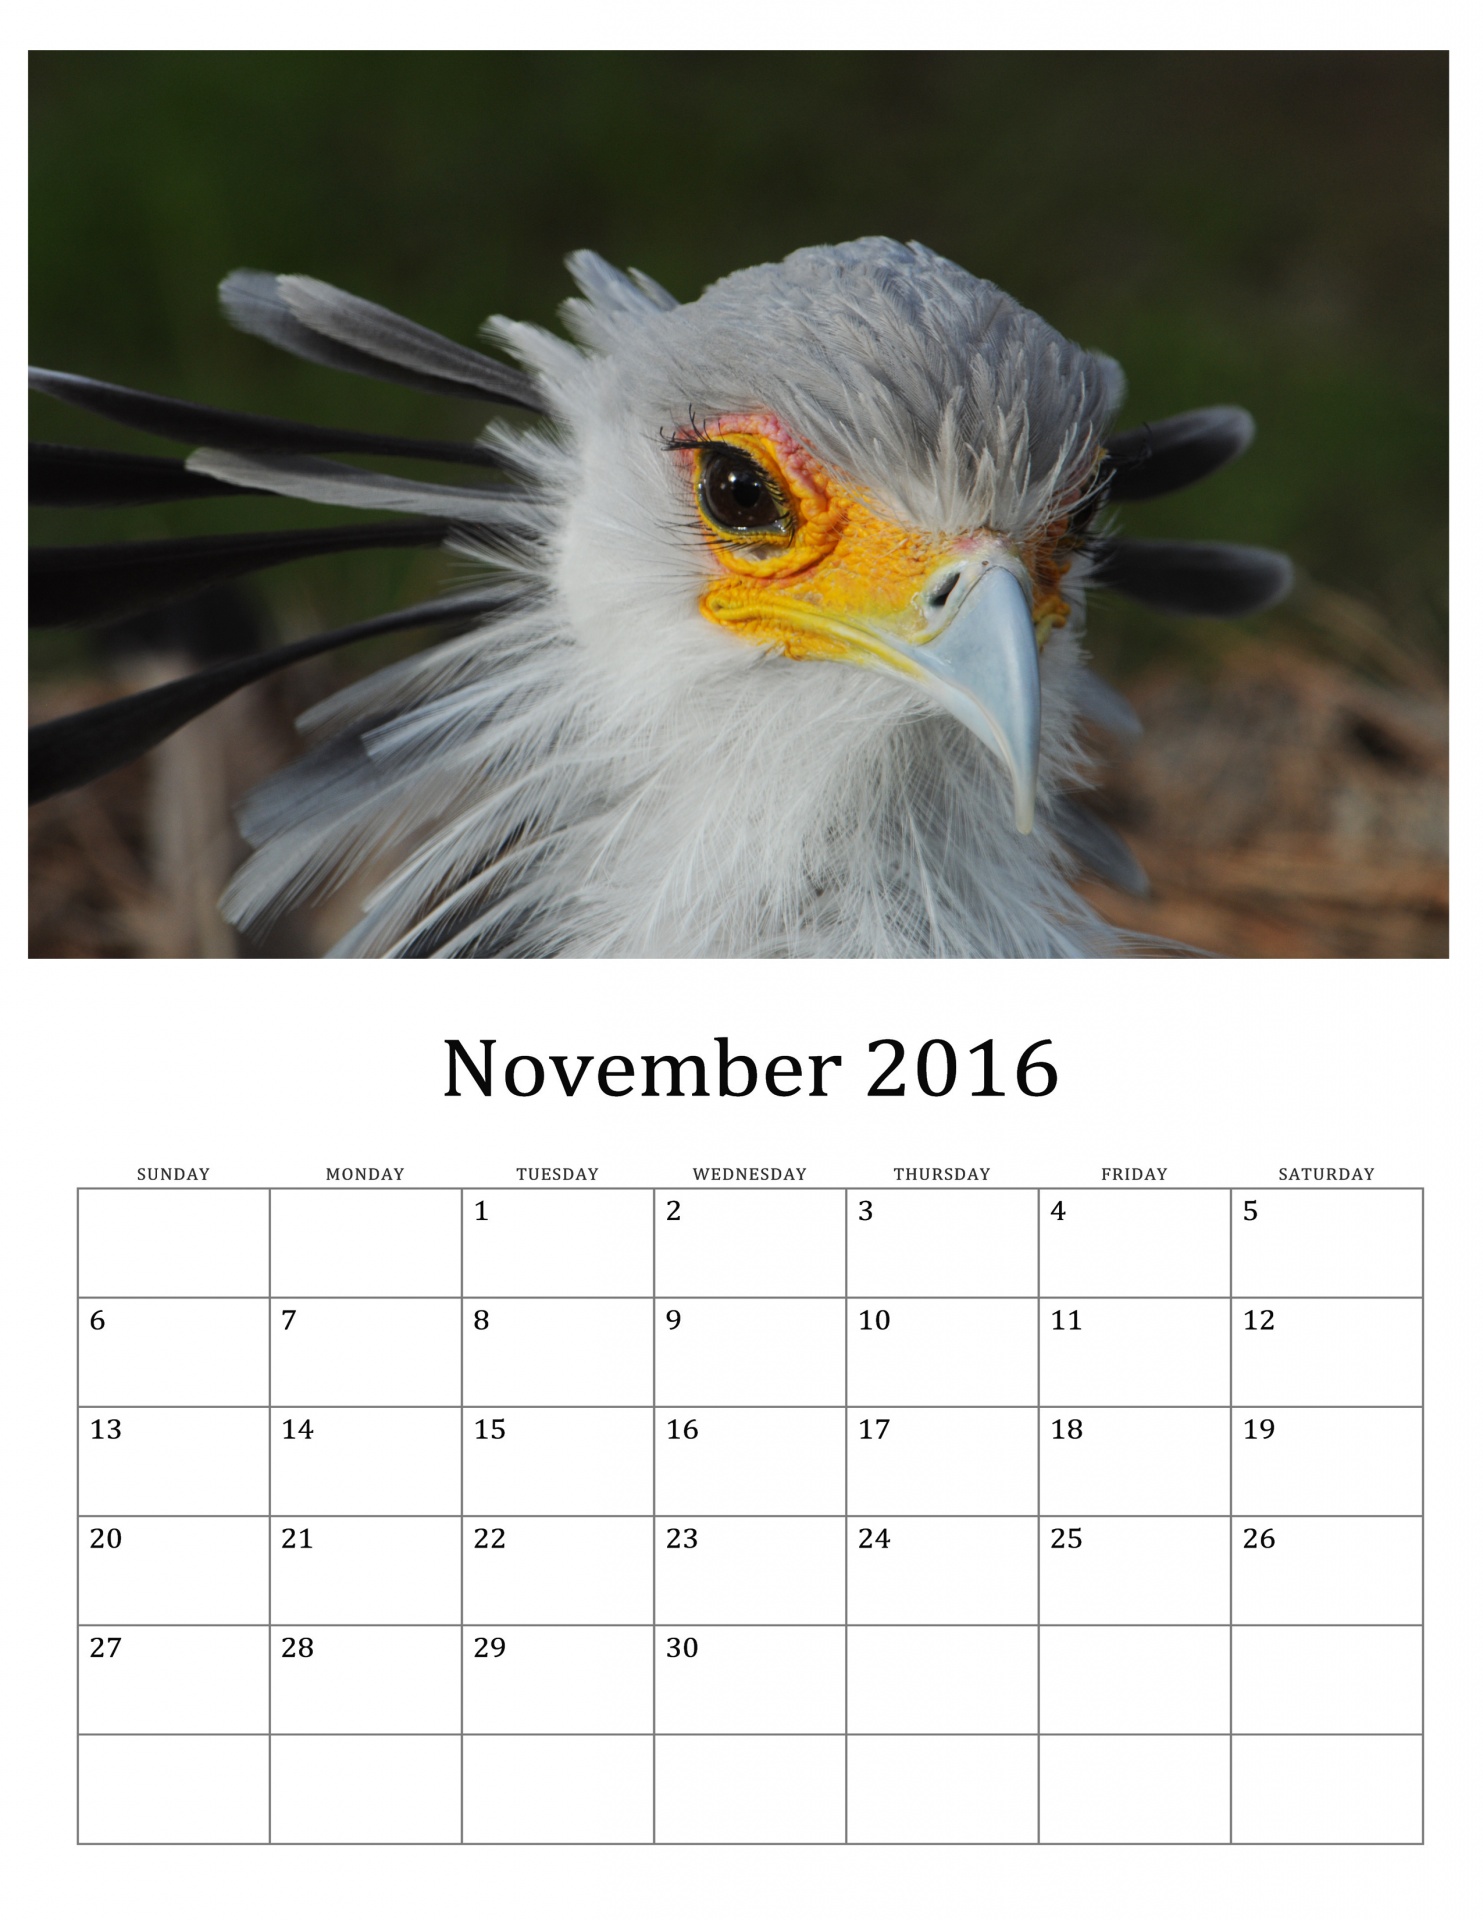 november-2016-calendar-of-birds-free-stock-photo-public-domain-pictures